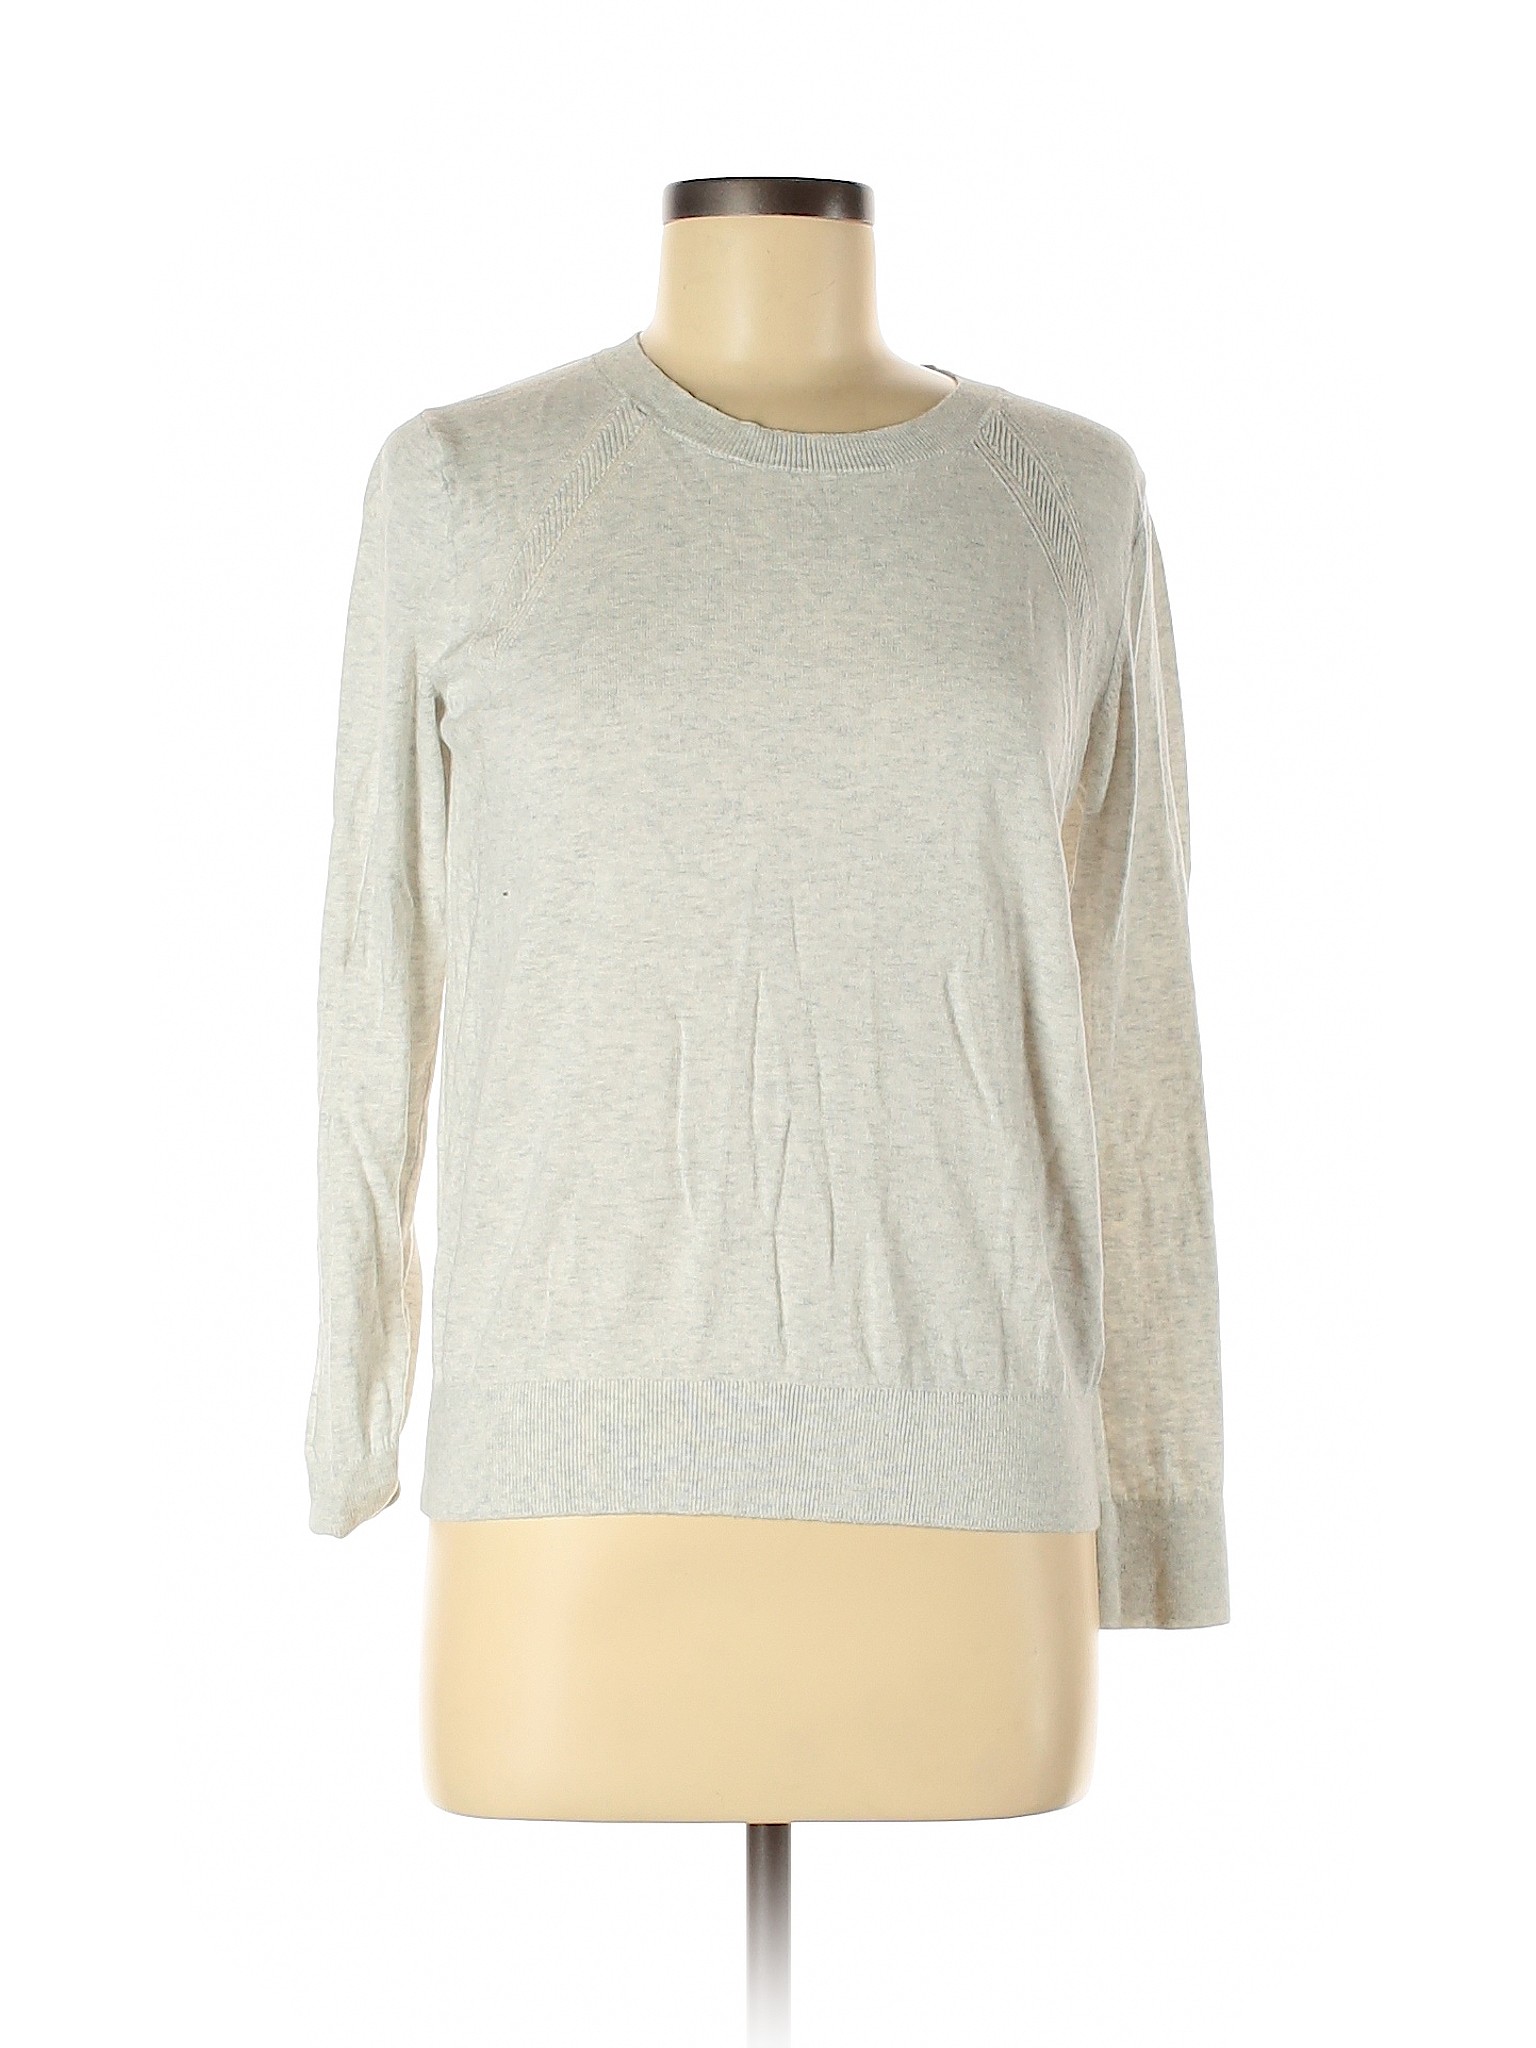 Banana Republic Factory Store Women Gray Pullover Sweater M | eBay